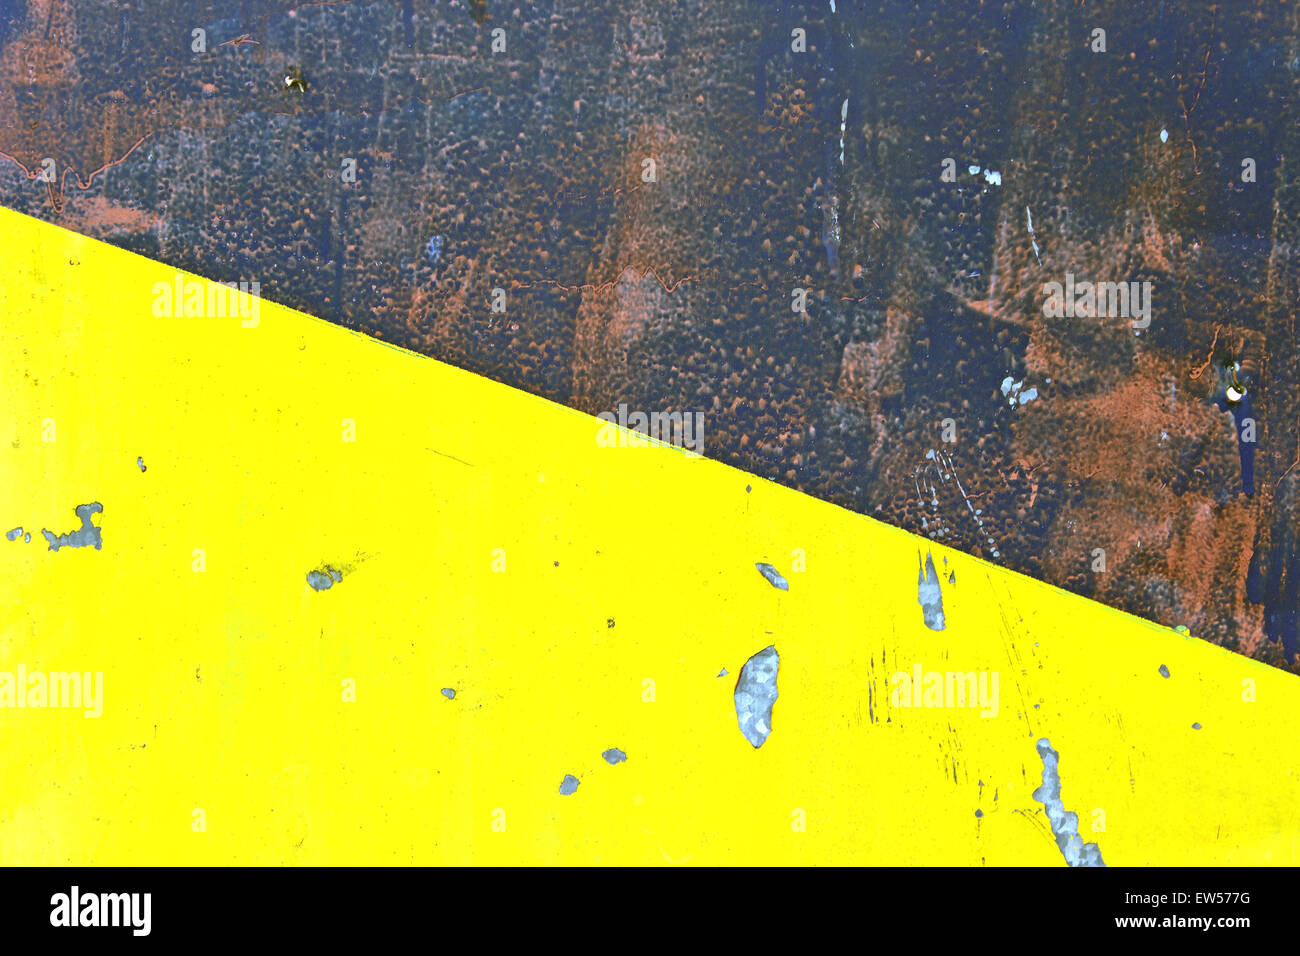 Grunge black and yellow iron surface background Stock Photo